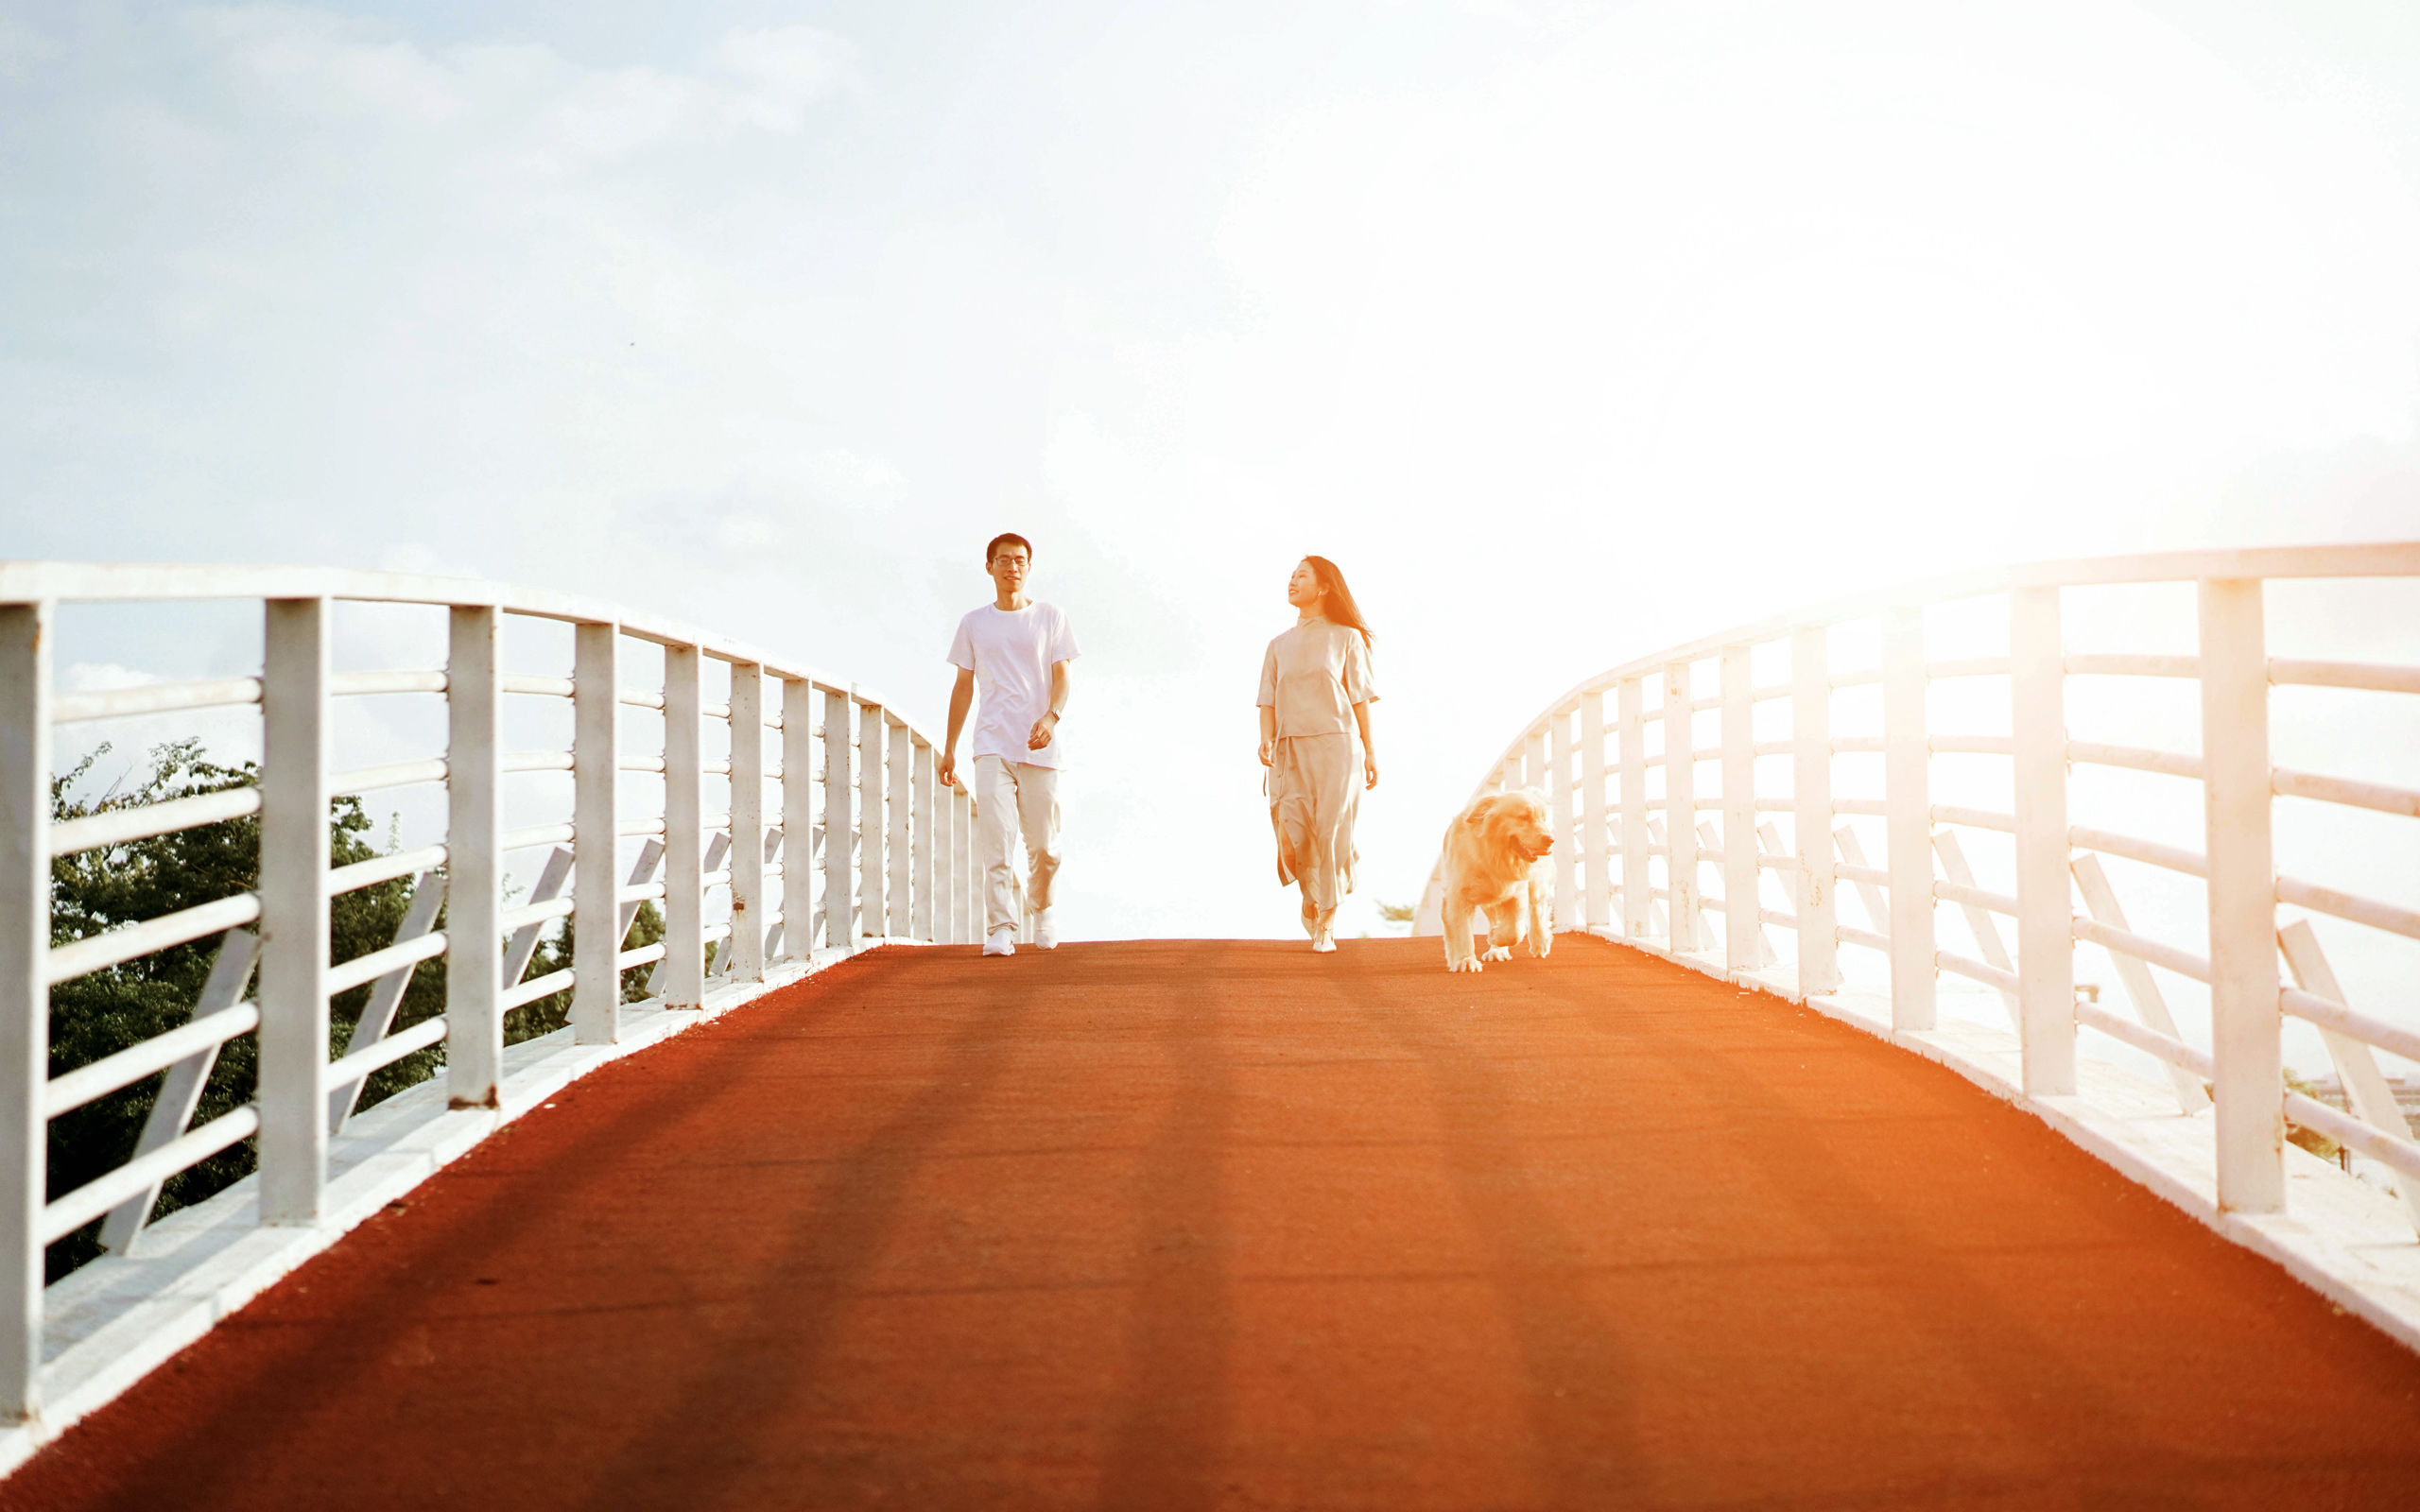 Man and woman walking dog across a bridge